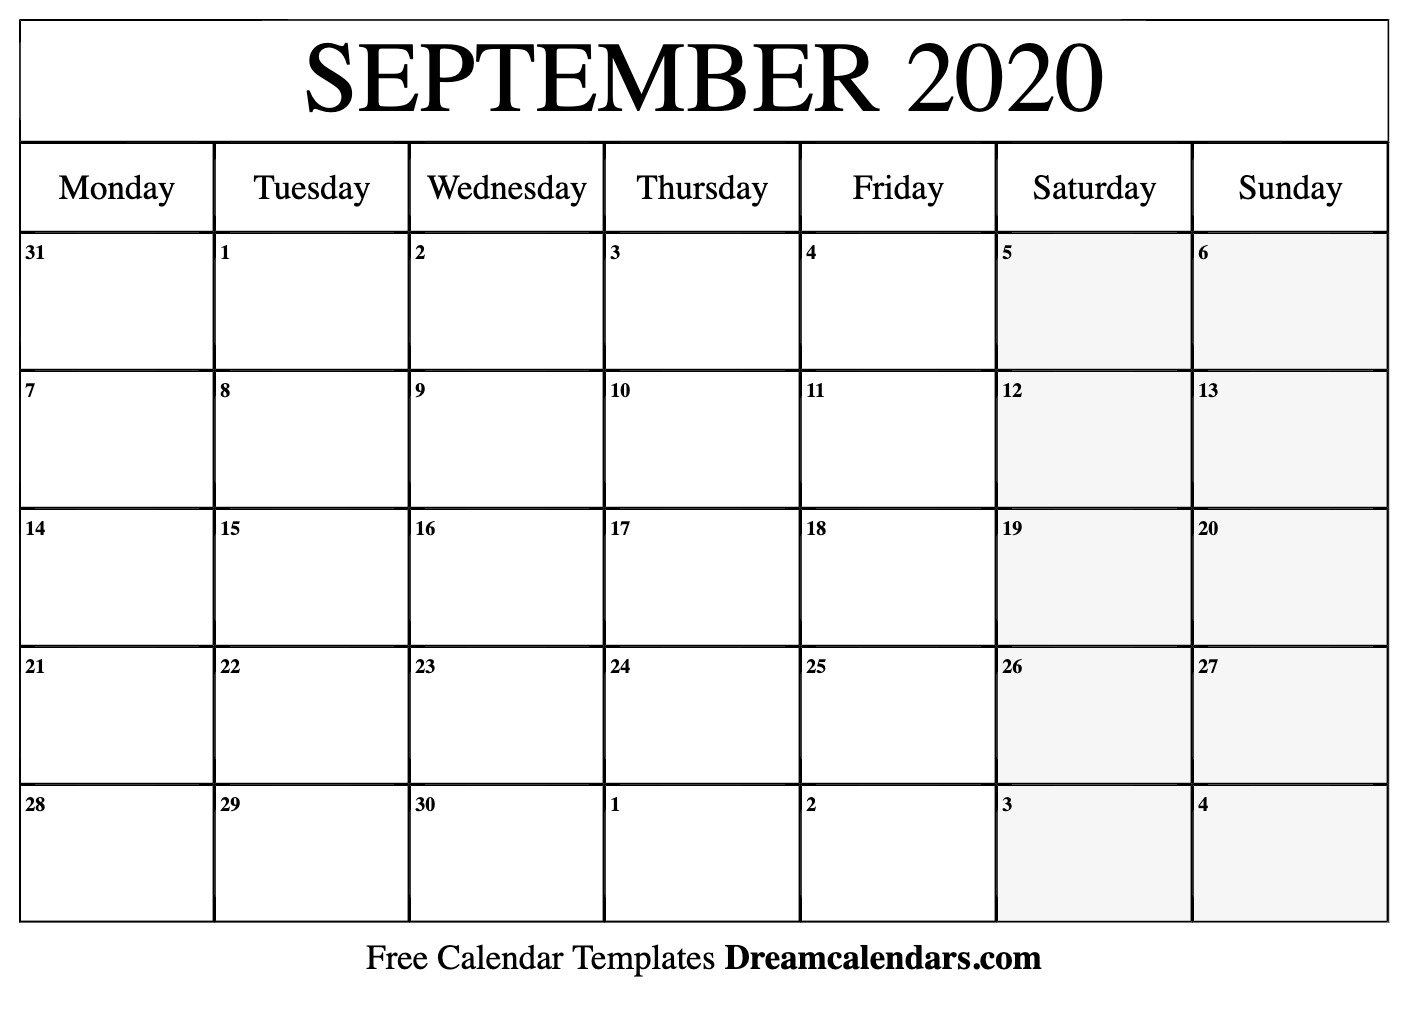 Free Download September 2020 Printable Calendar Dream